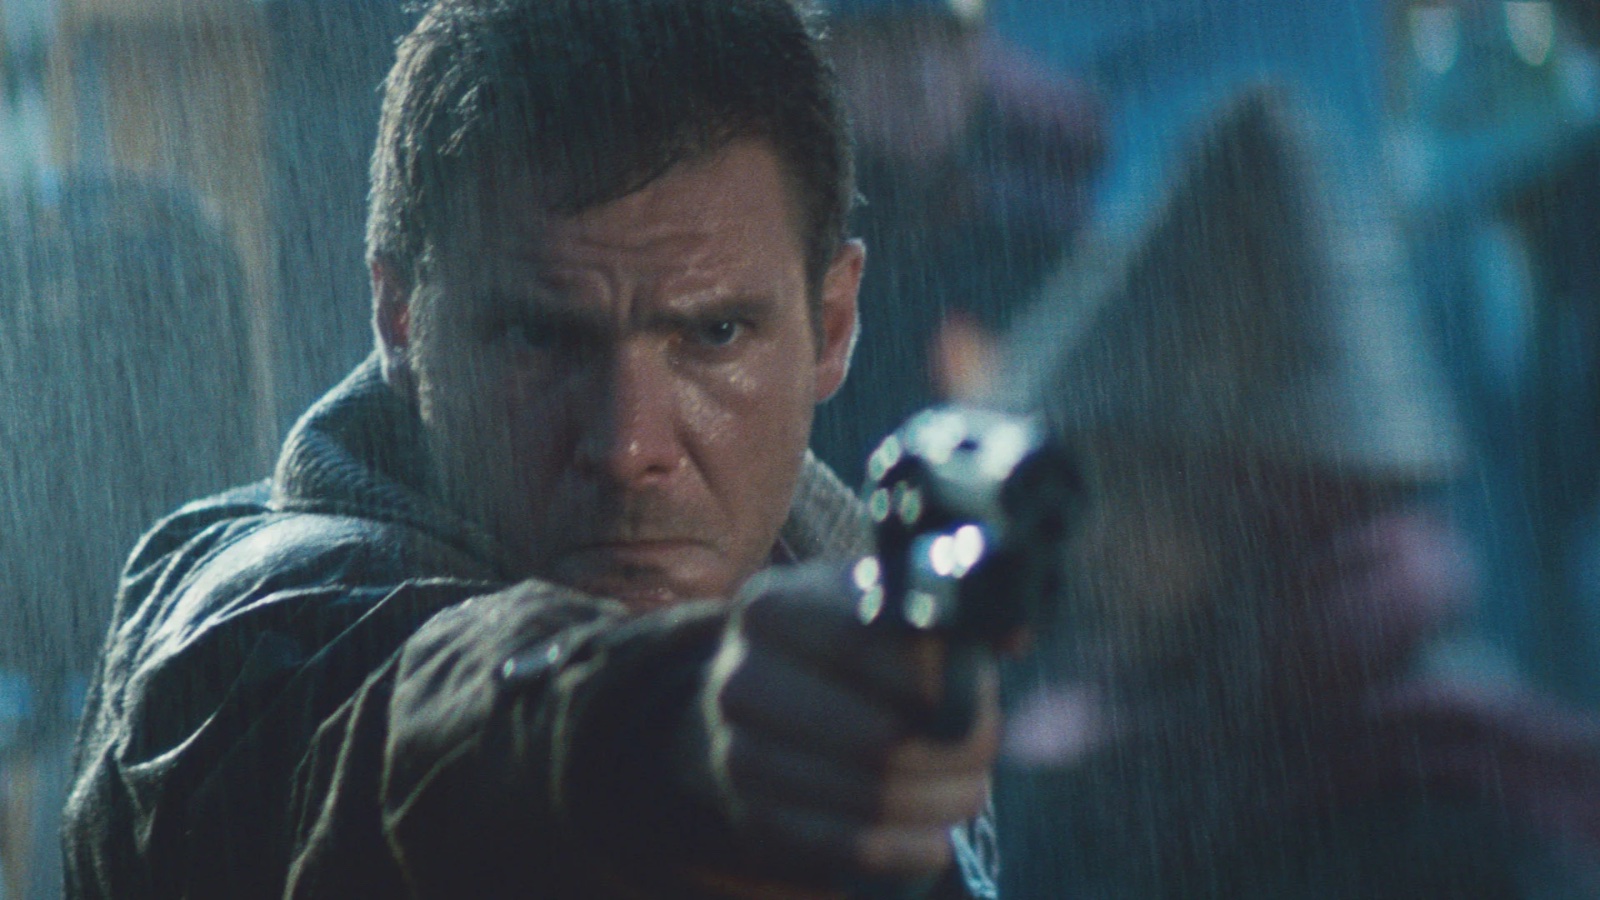 Blade Runner (1982) by Ridley Scott